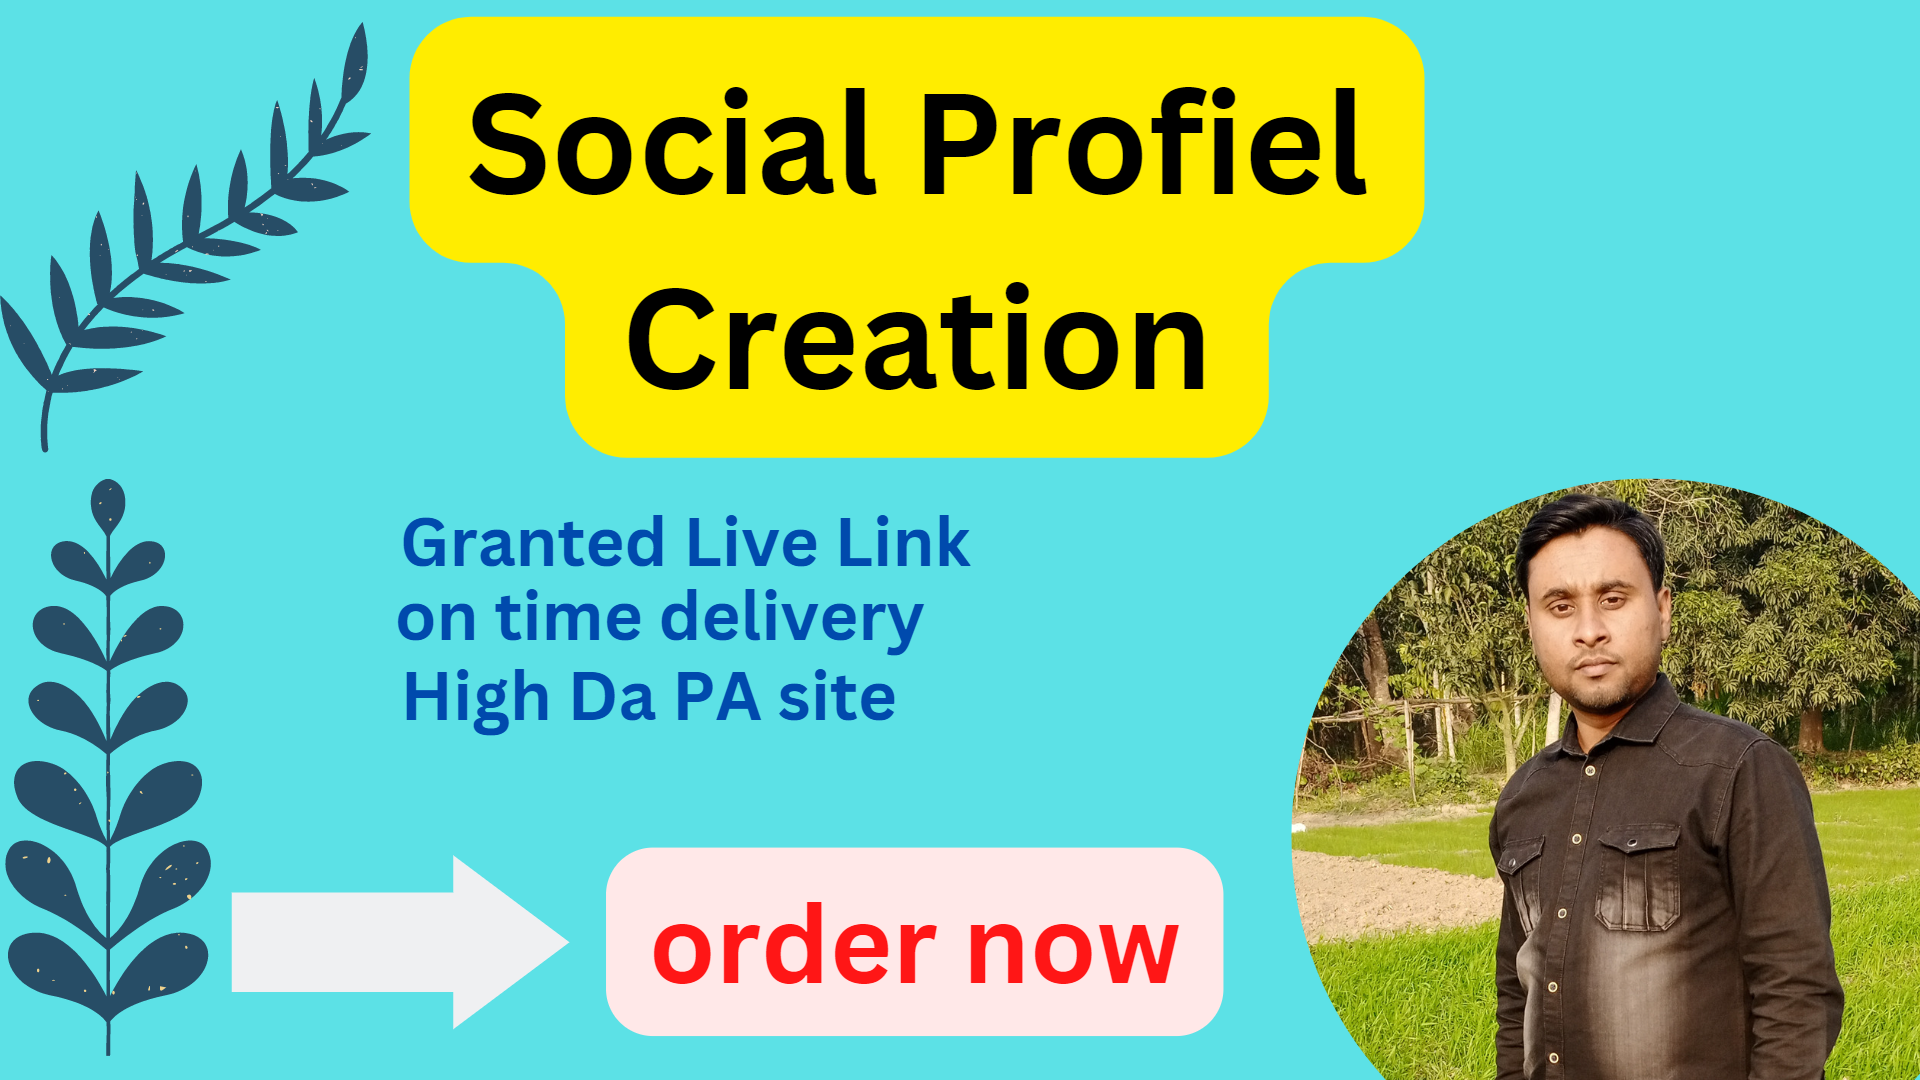 I will do 100 seo social profile creation backlinks with 100% quality high da pa